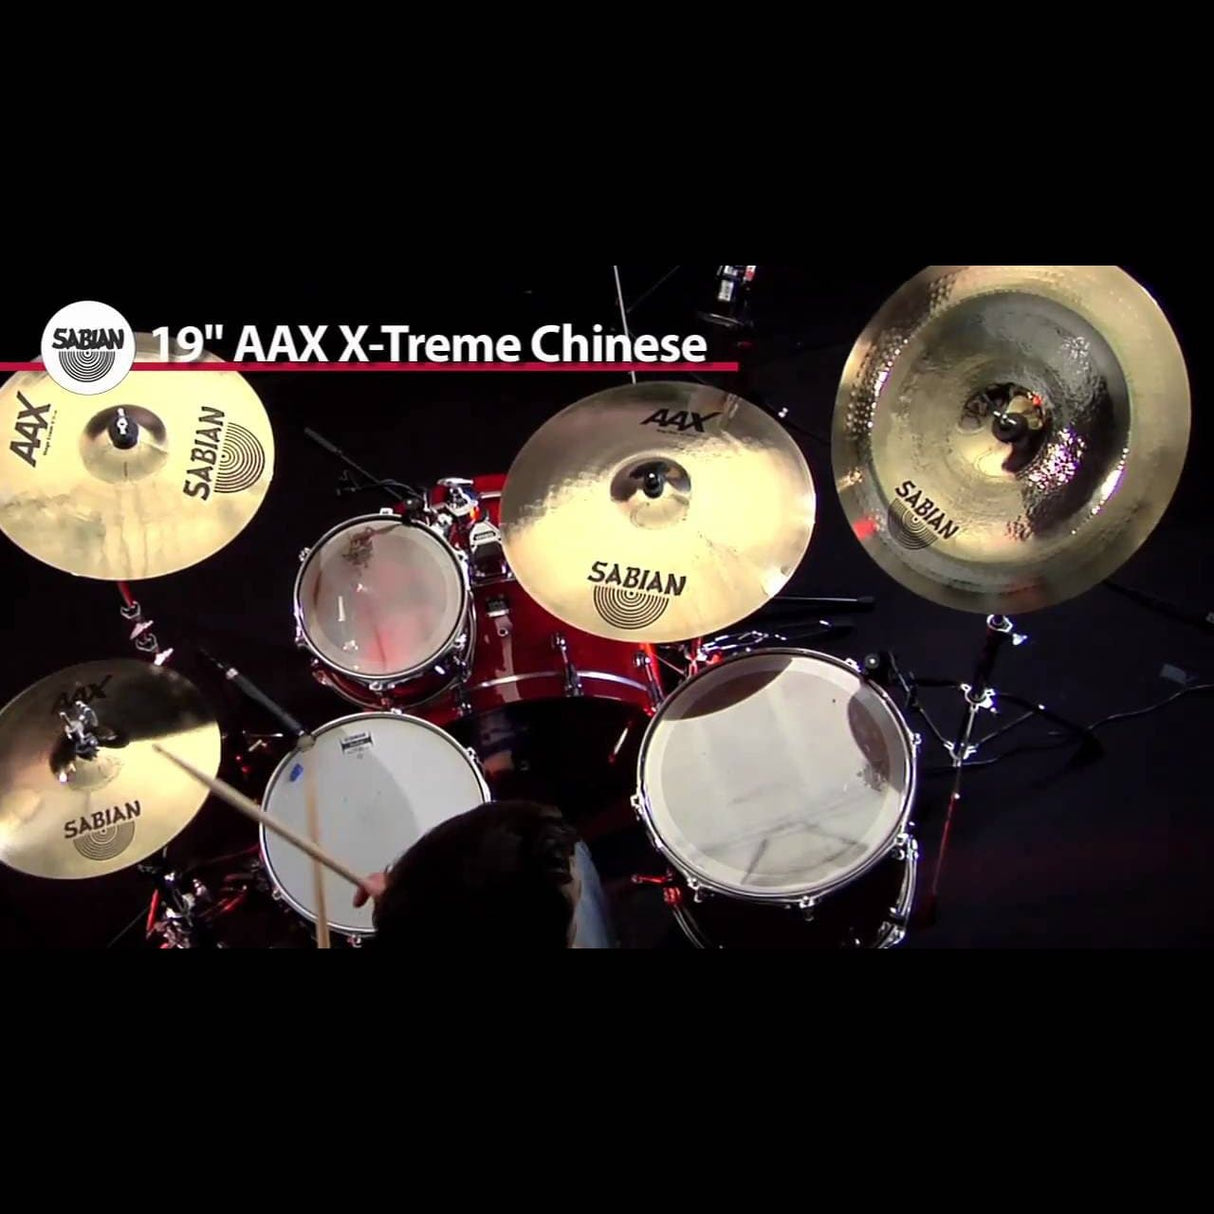 Sabian AAX X-Treme Chinese Cymbal 19"